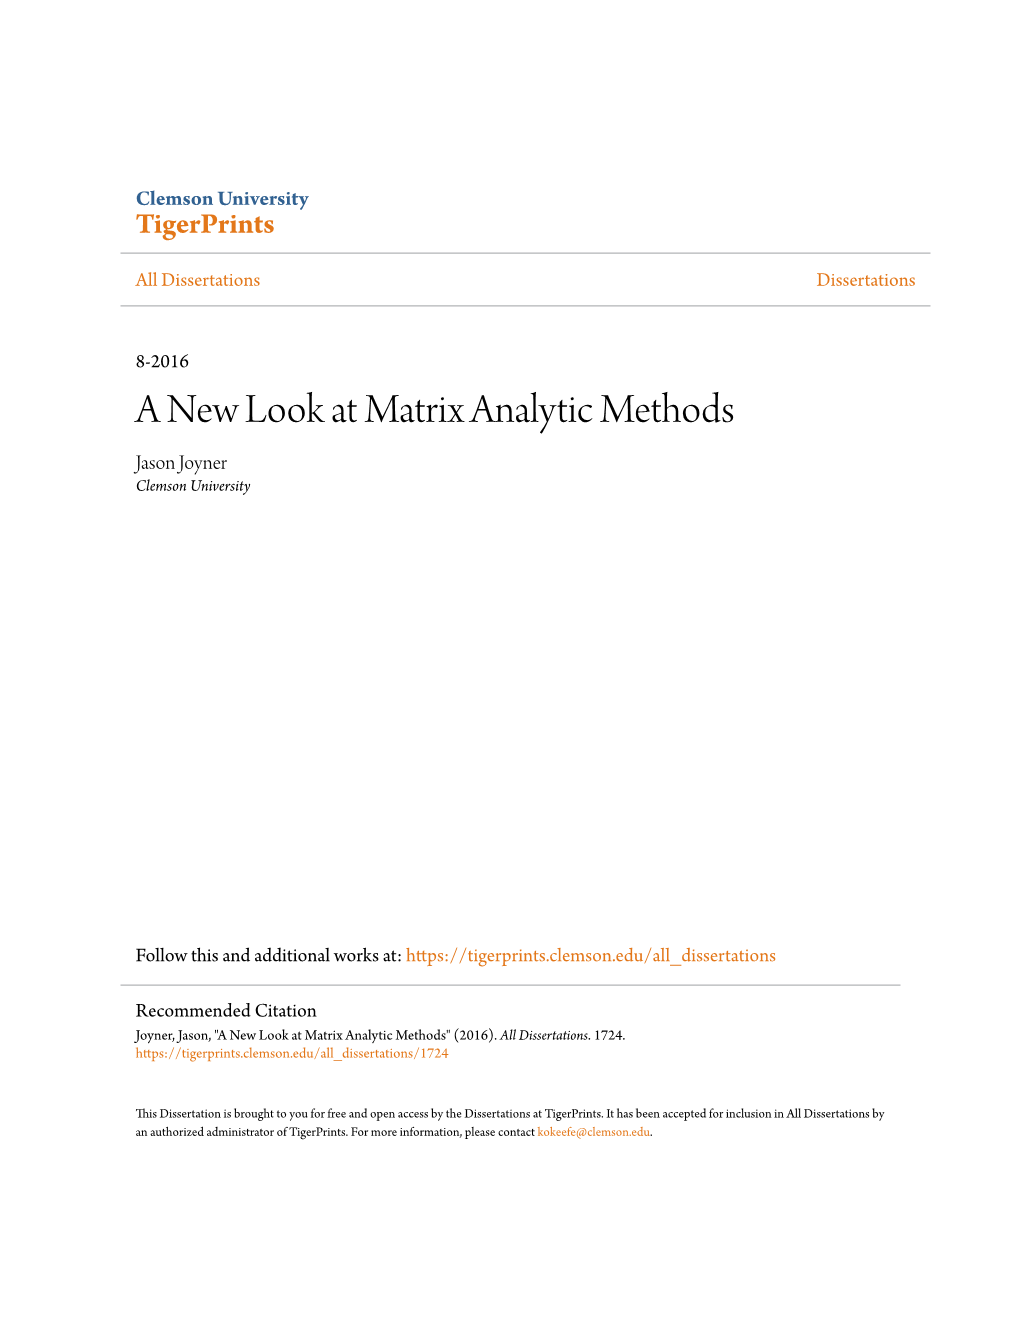 A New Look at Matrix Analytic Methods Jason Joyner Clemson University